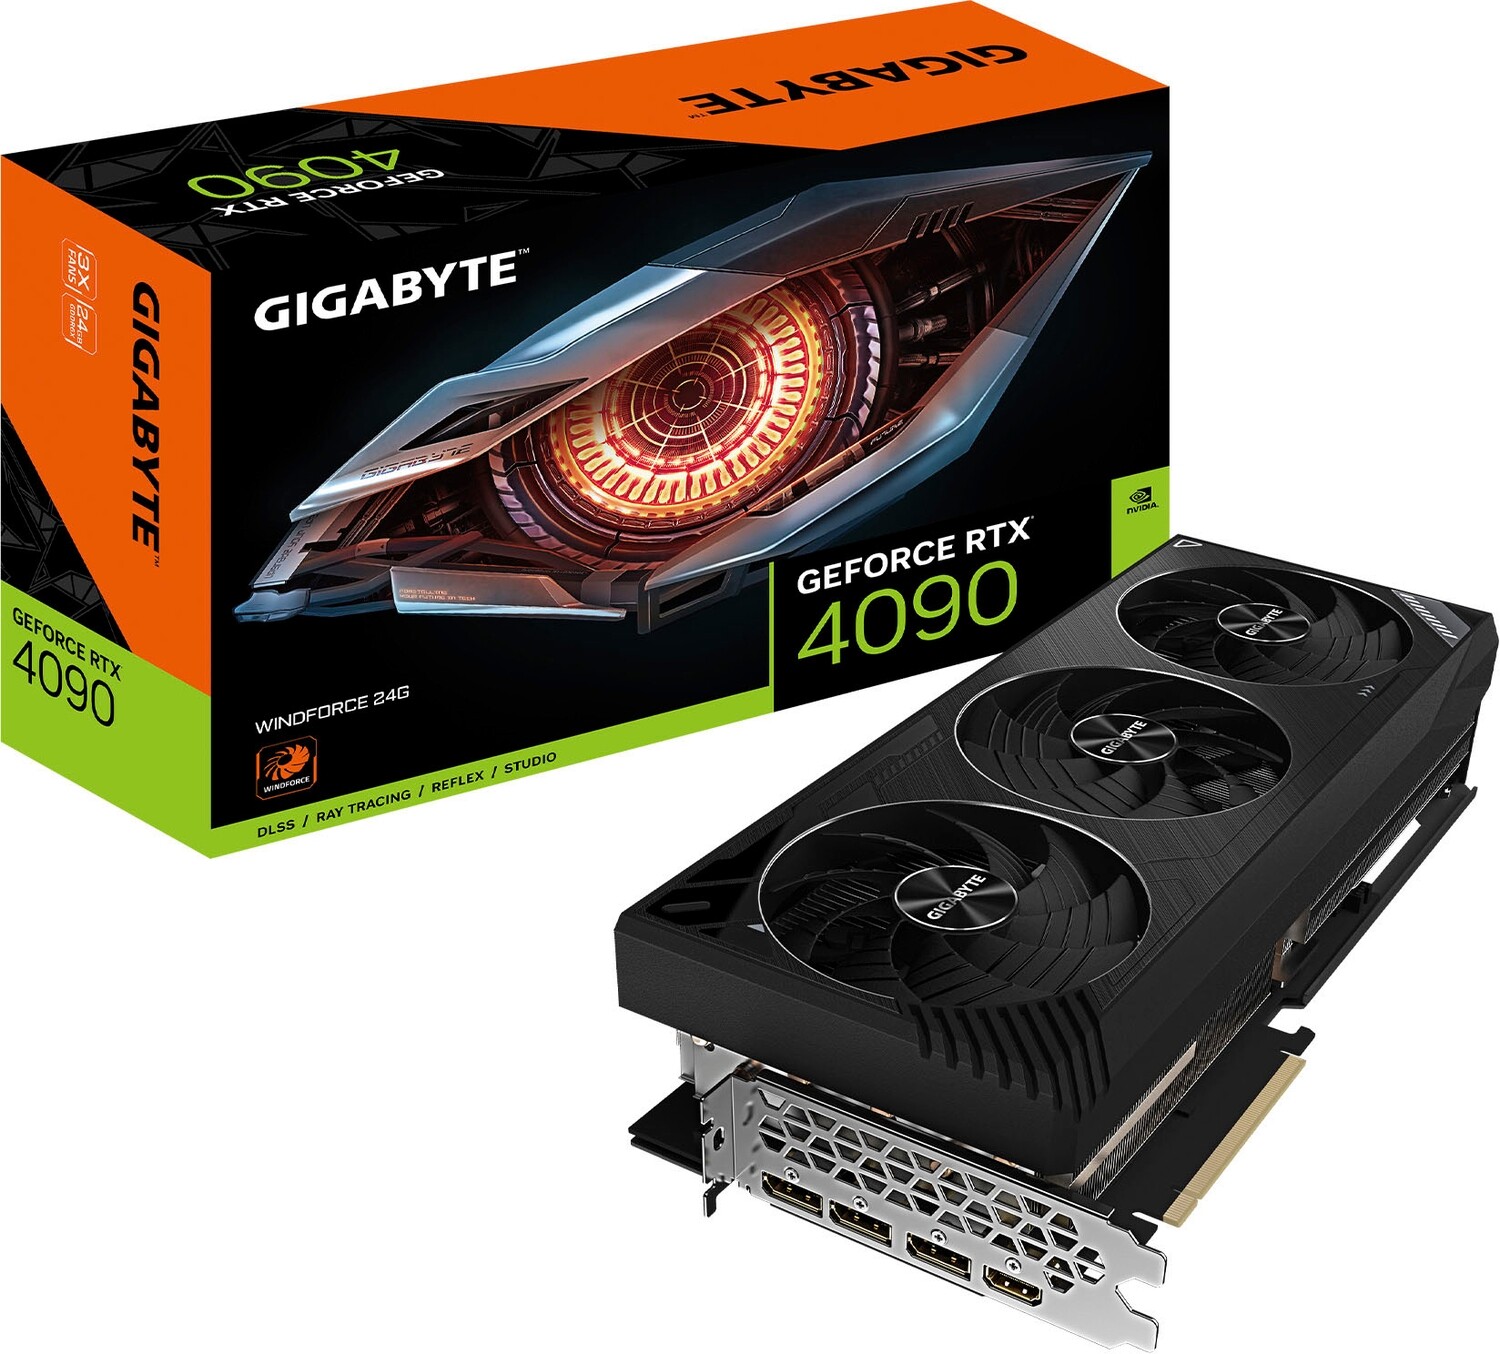 GIGABYTE NVIDIA GeForce RTX 4090 24GB GDDR6X 384-bit Graphics Card with 3x WINDFORCE  Fans (GV-N4090WF3-24GD) - Black